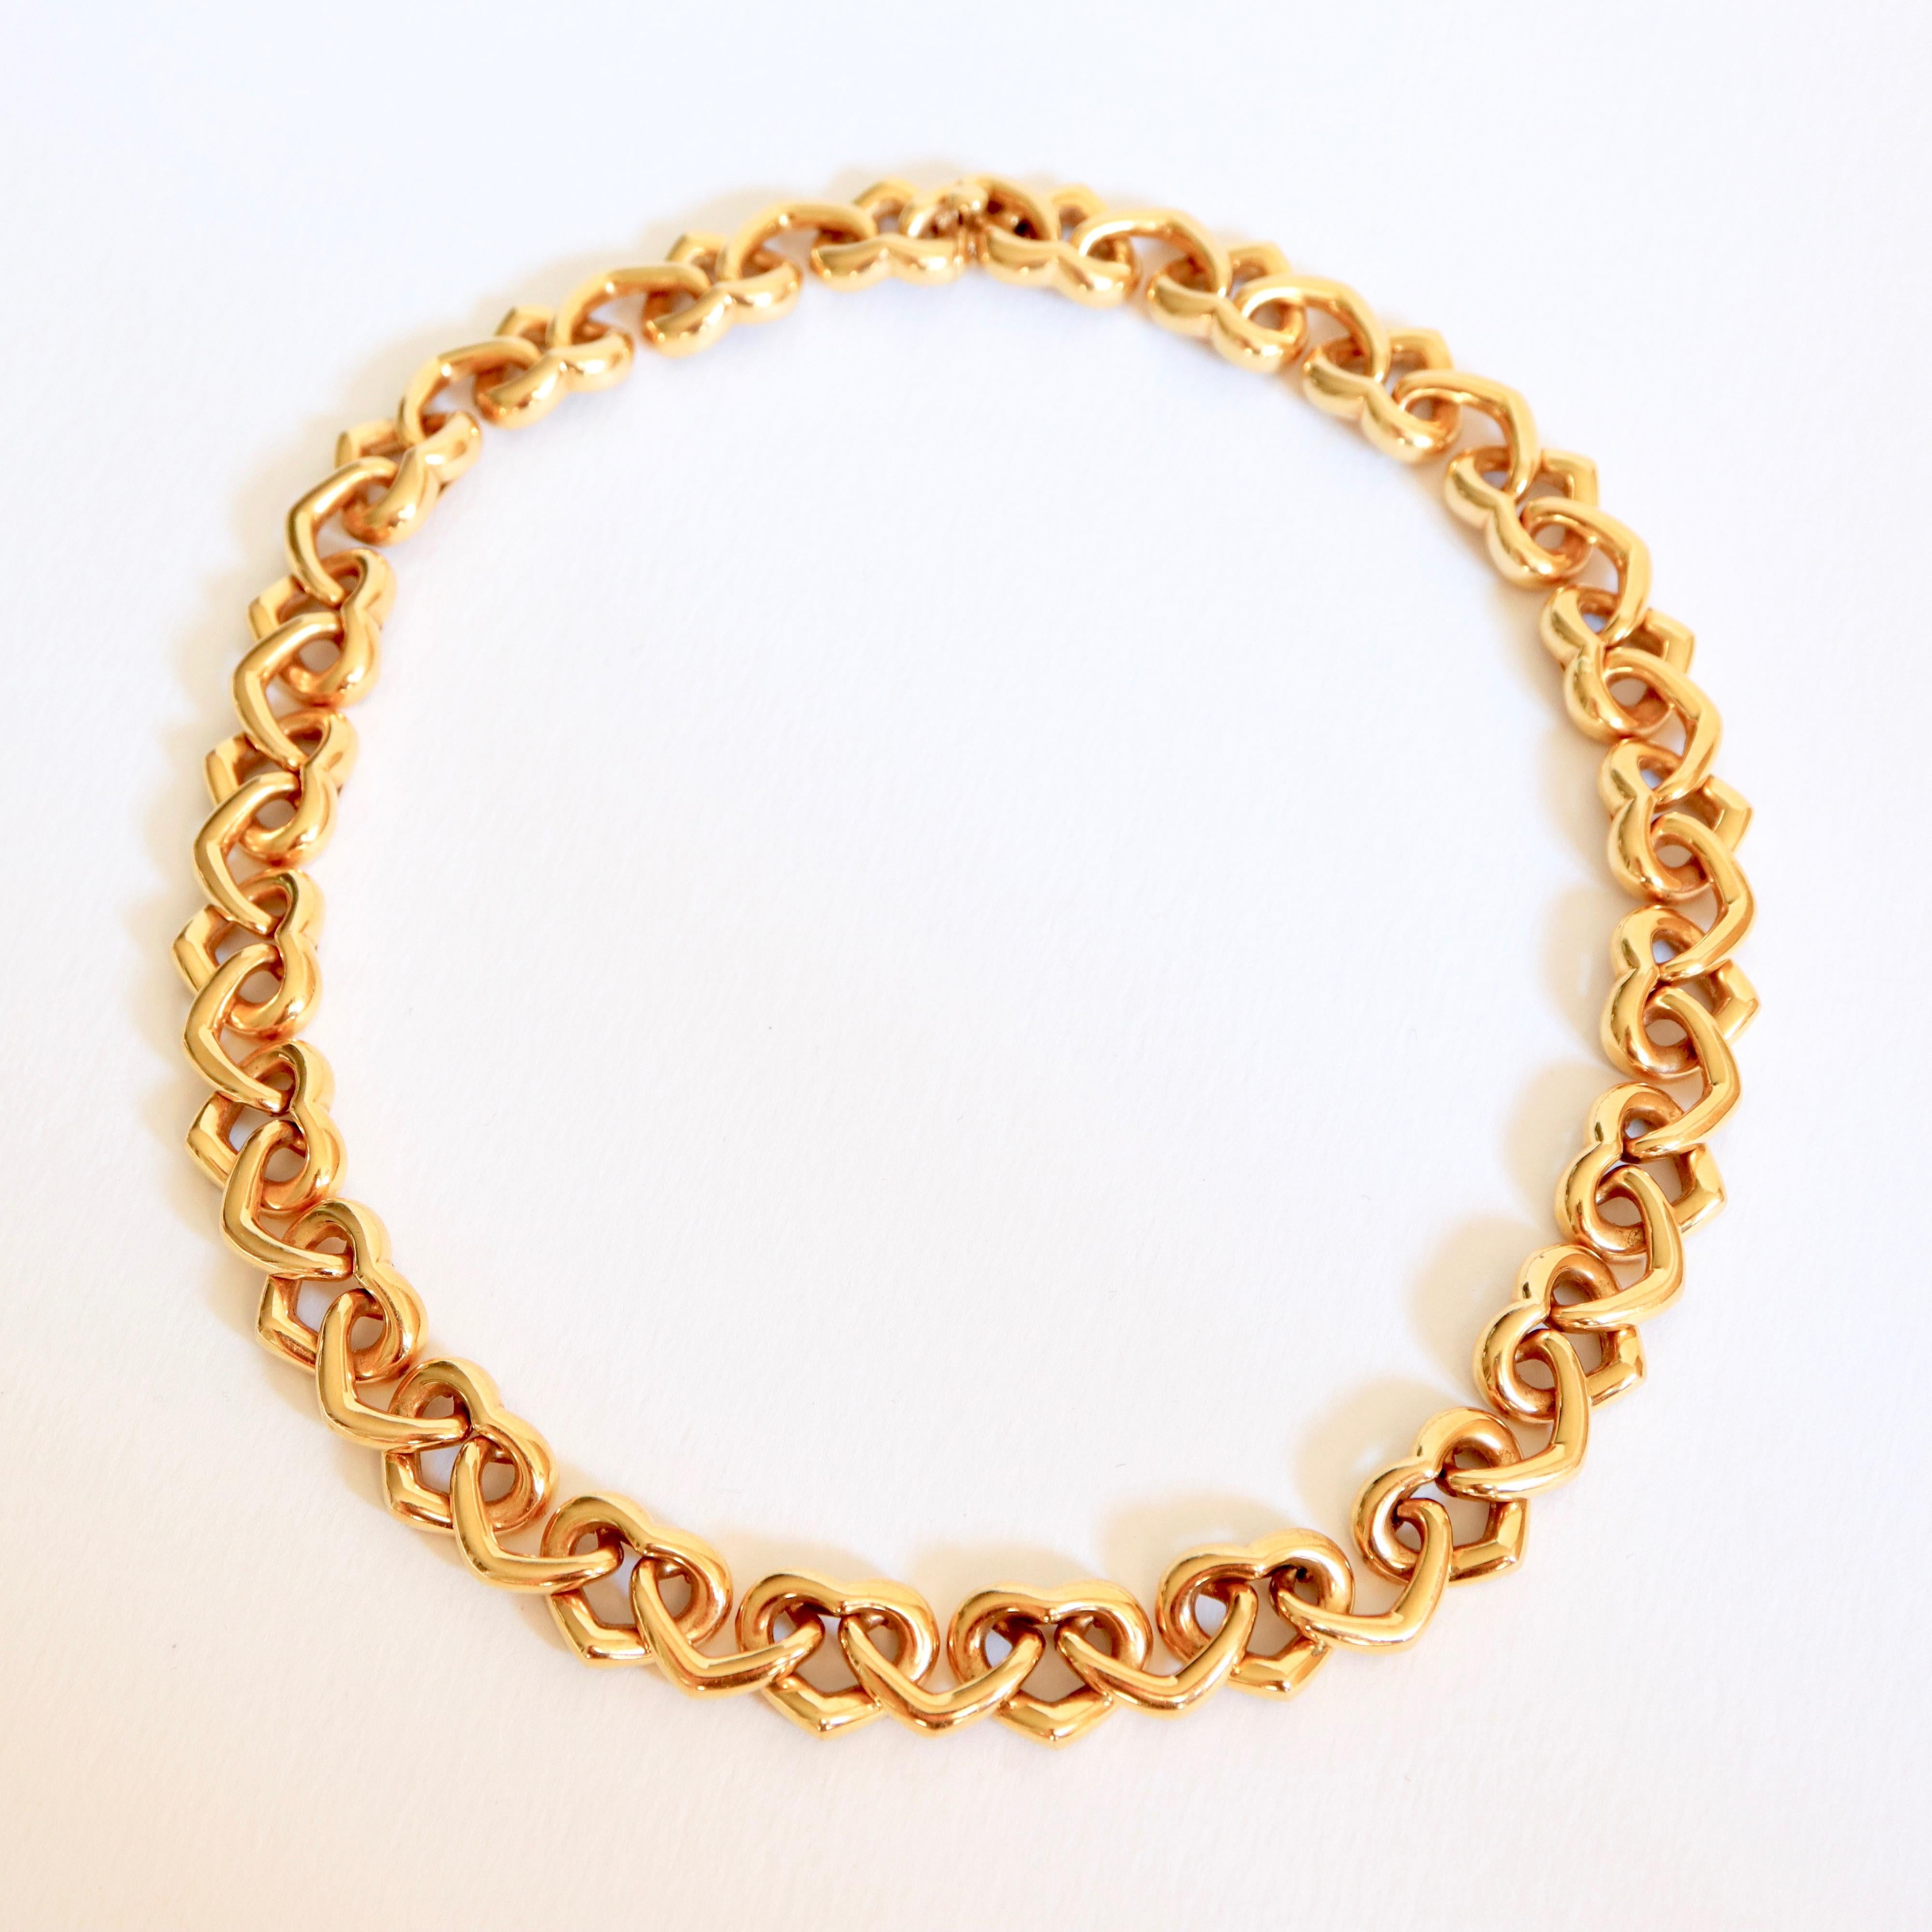 5 tola gold chain design